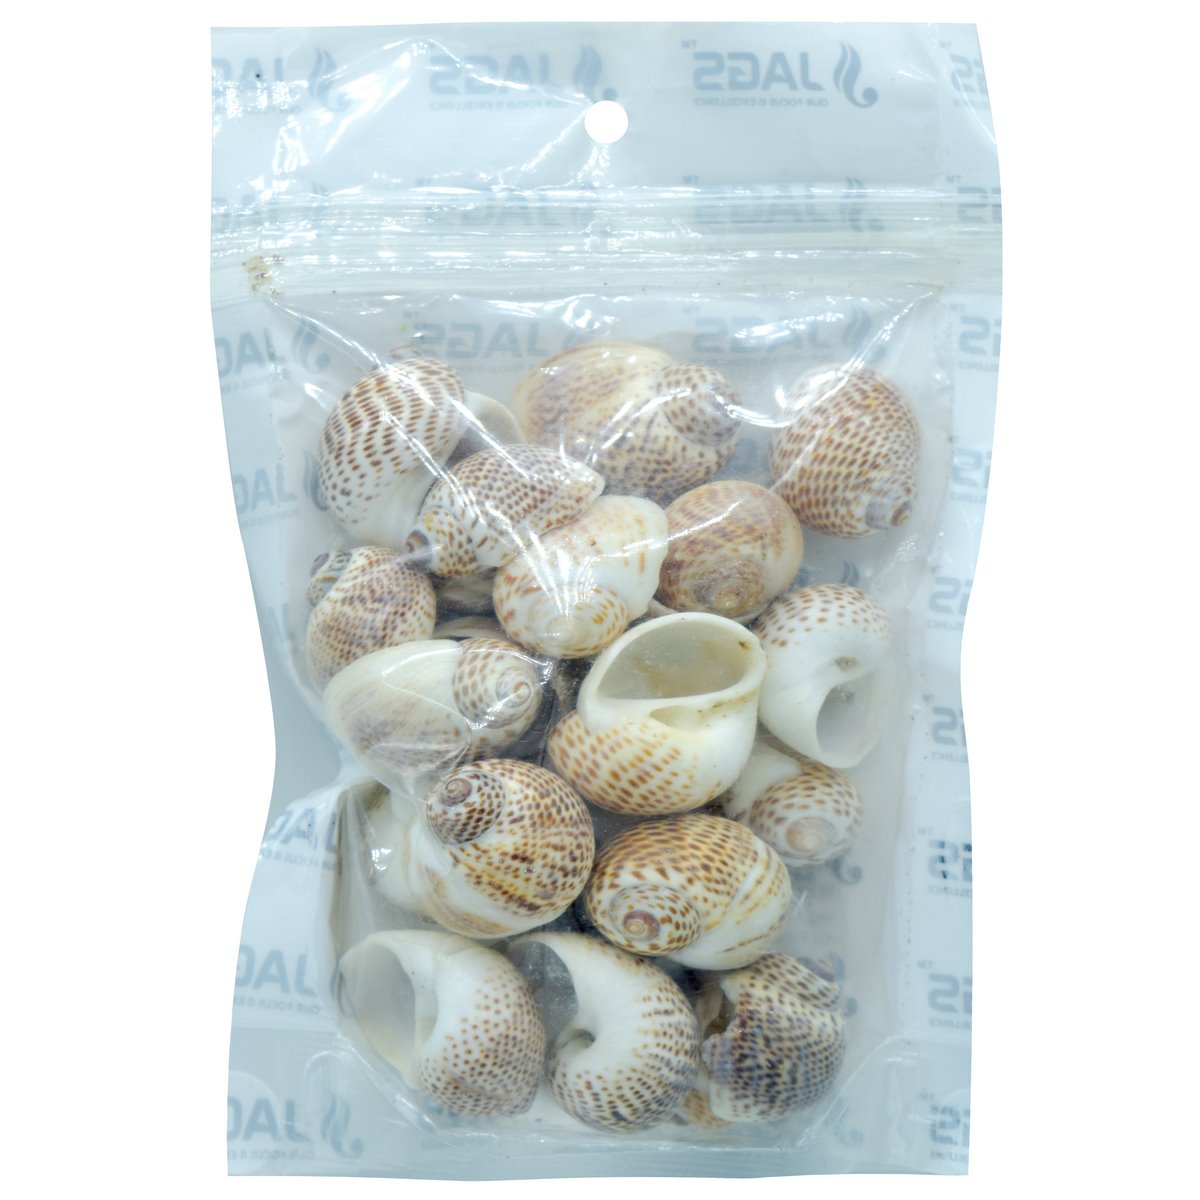 jags-mumbai Resin Shells for resin art (pack of 50gm)